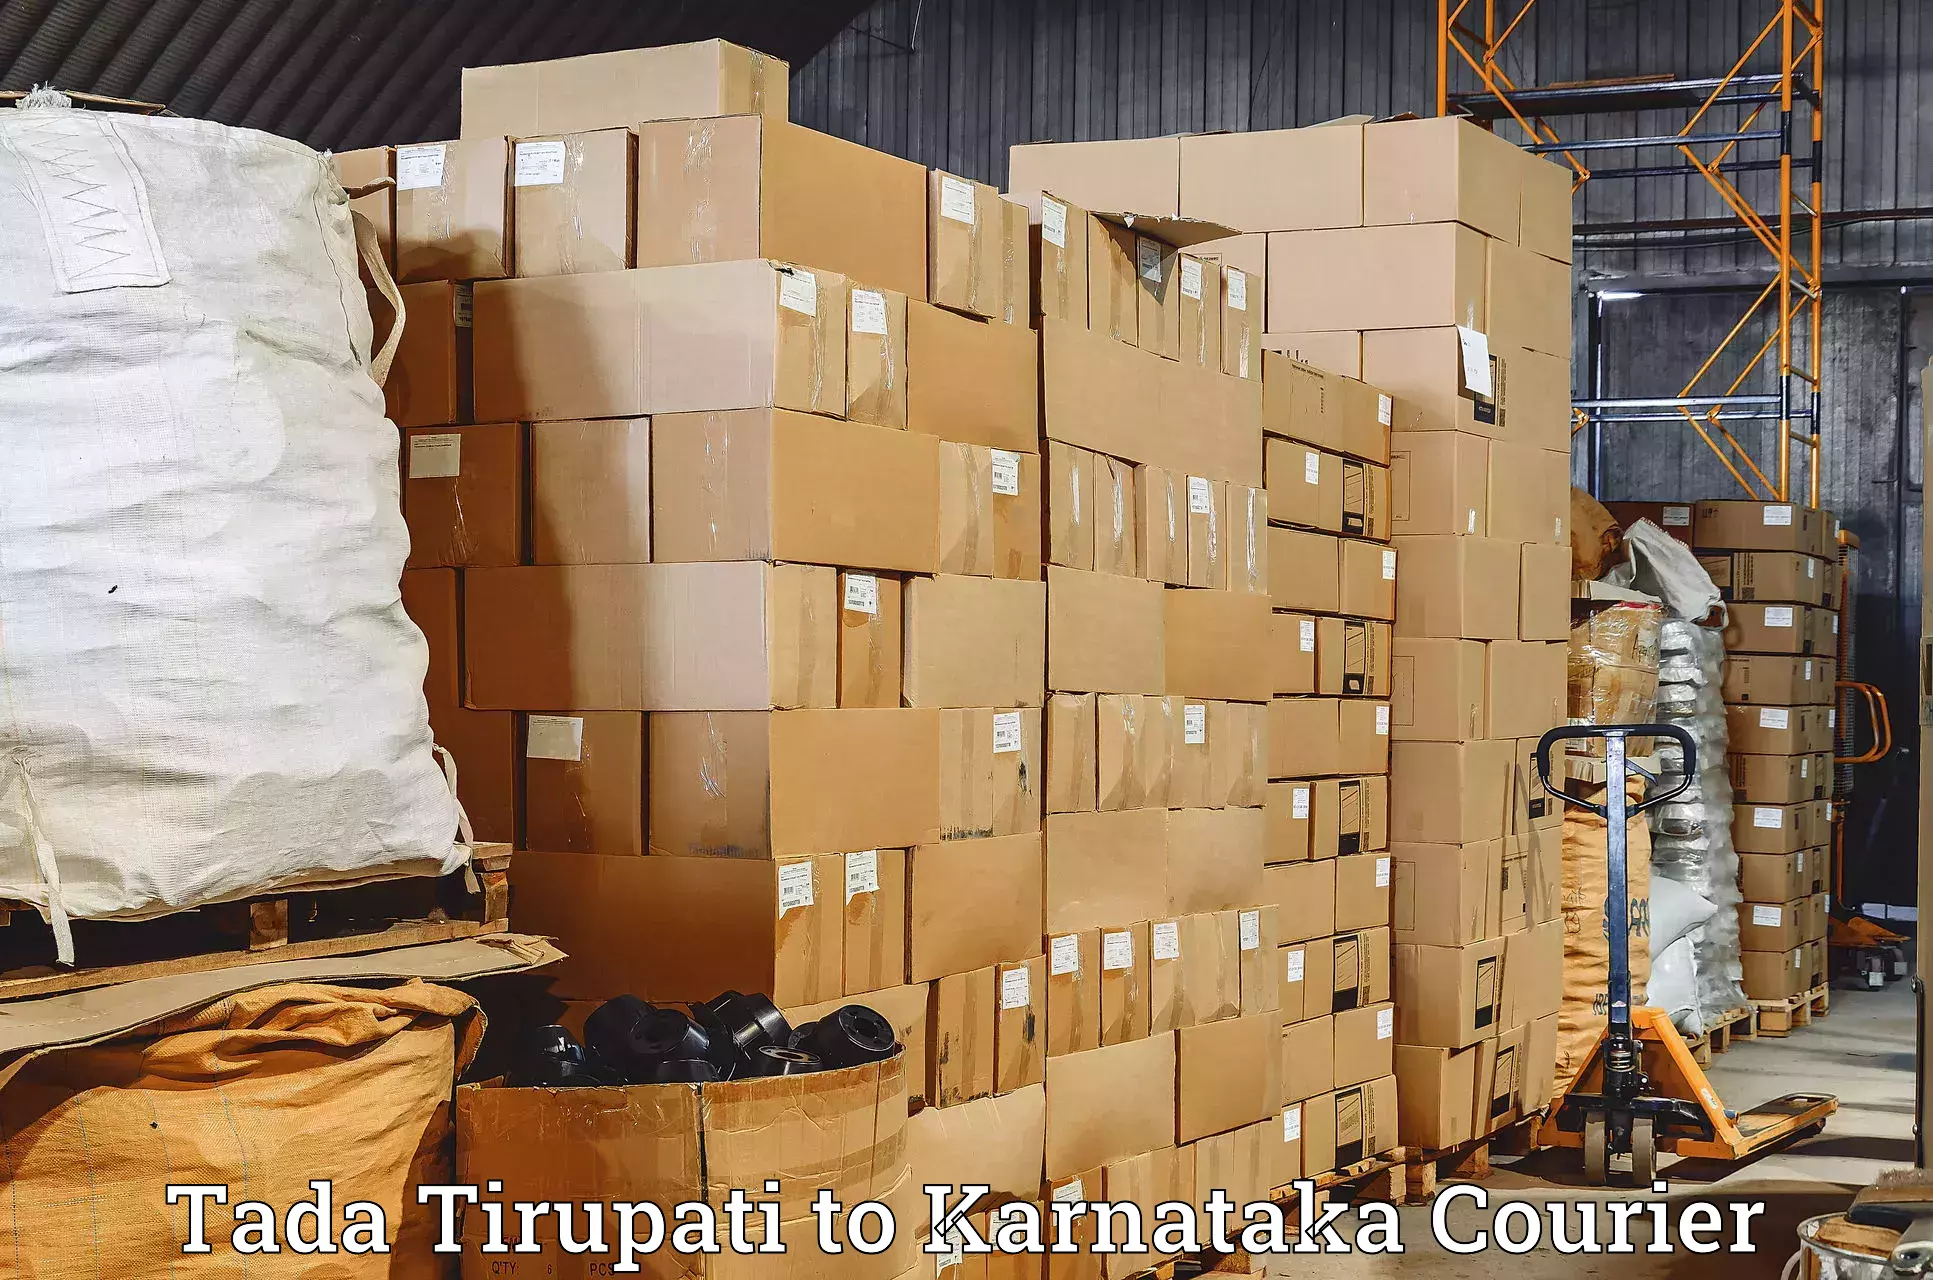 State-of-the-art courier technology Tada Tirupati to Badami